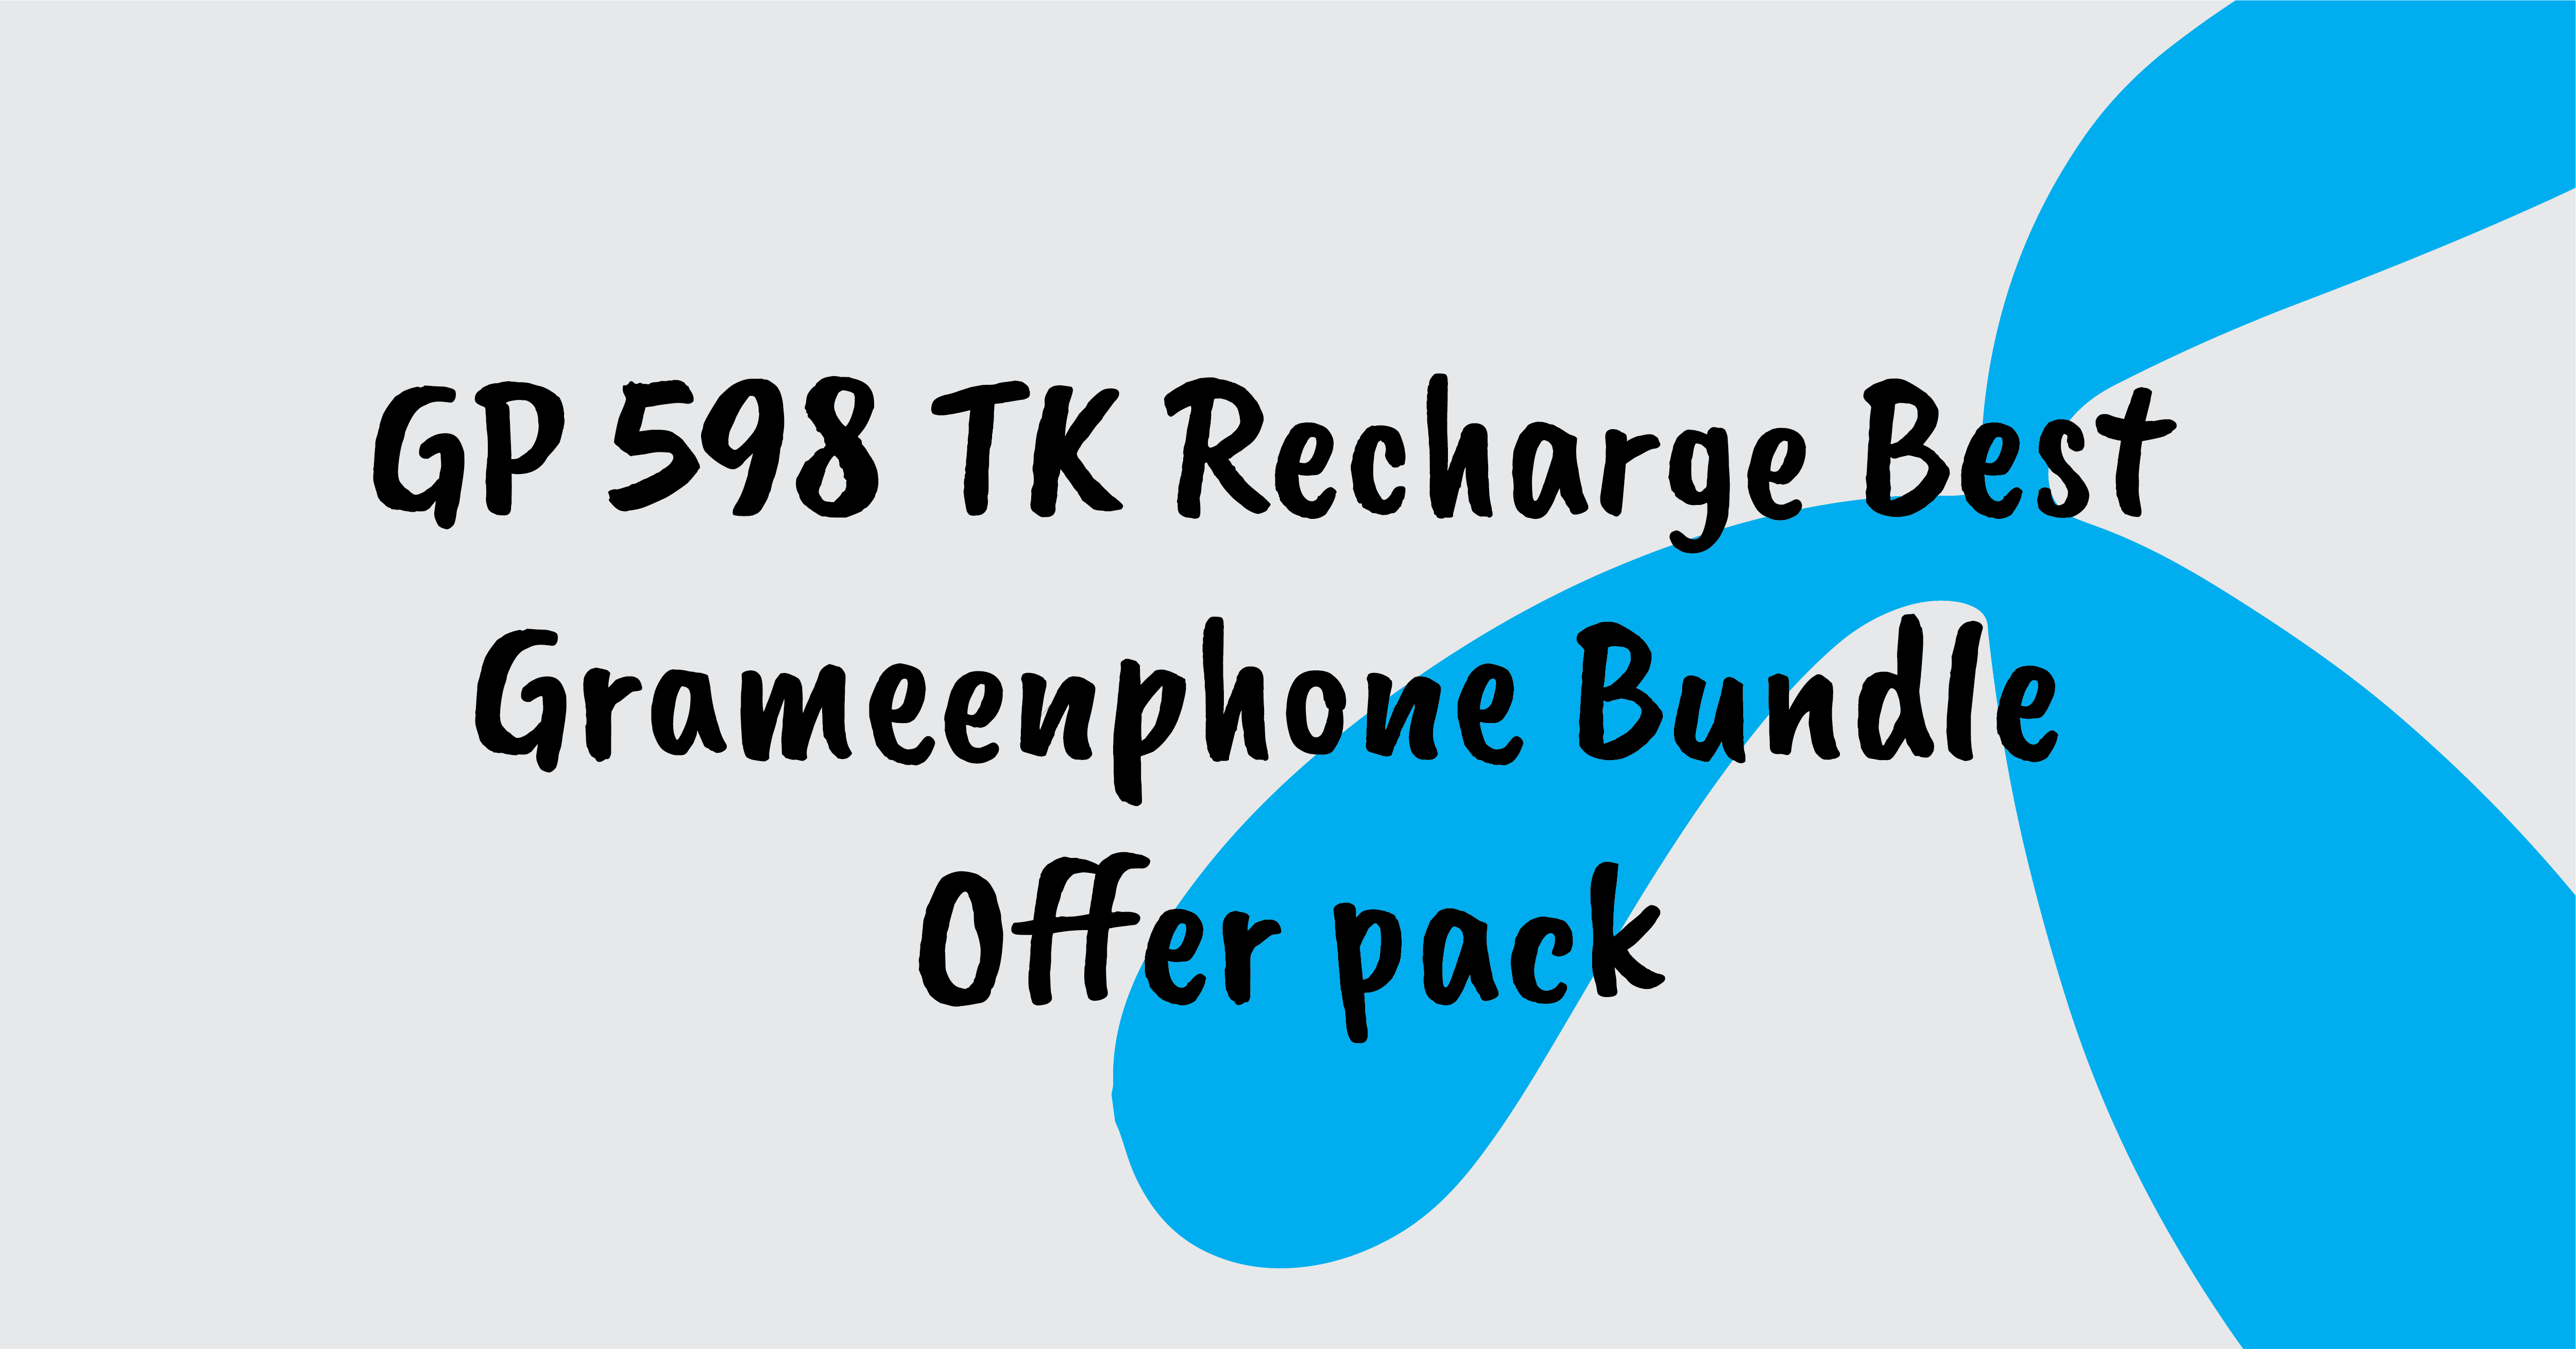 GP 598 TK Recharge Offer.